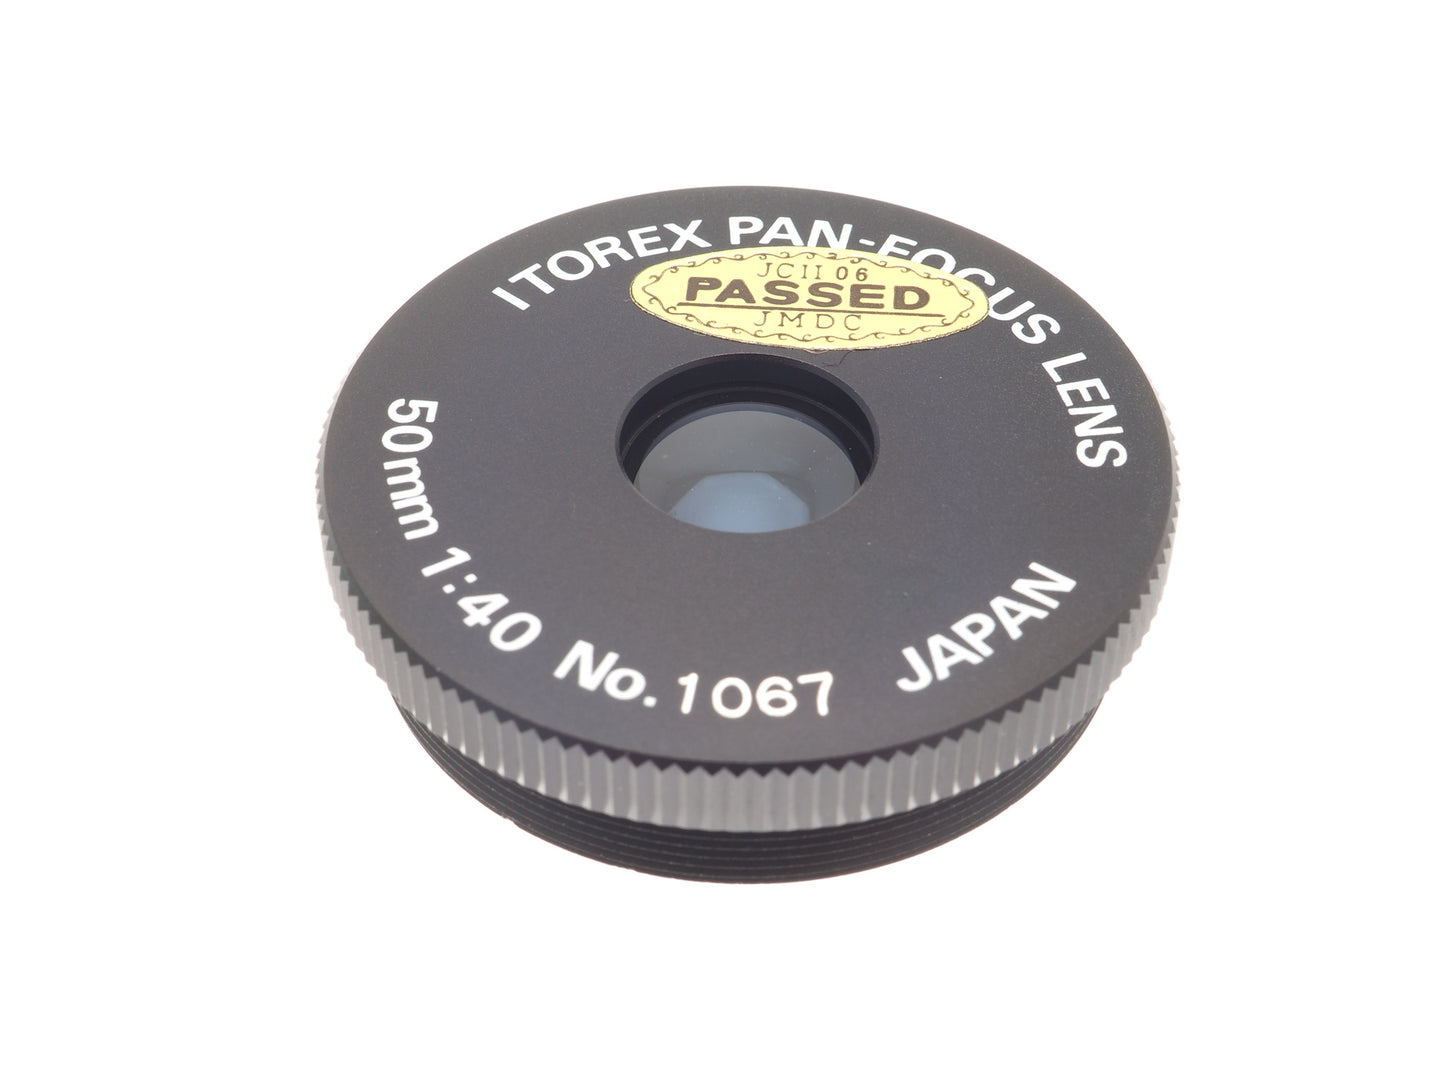 Itorex 50mm f40 Pan-Focus Lens - Lens